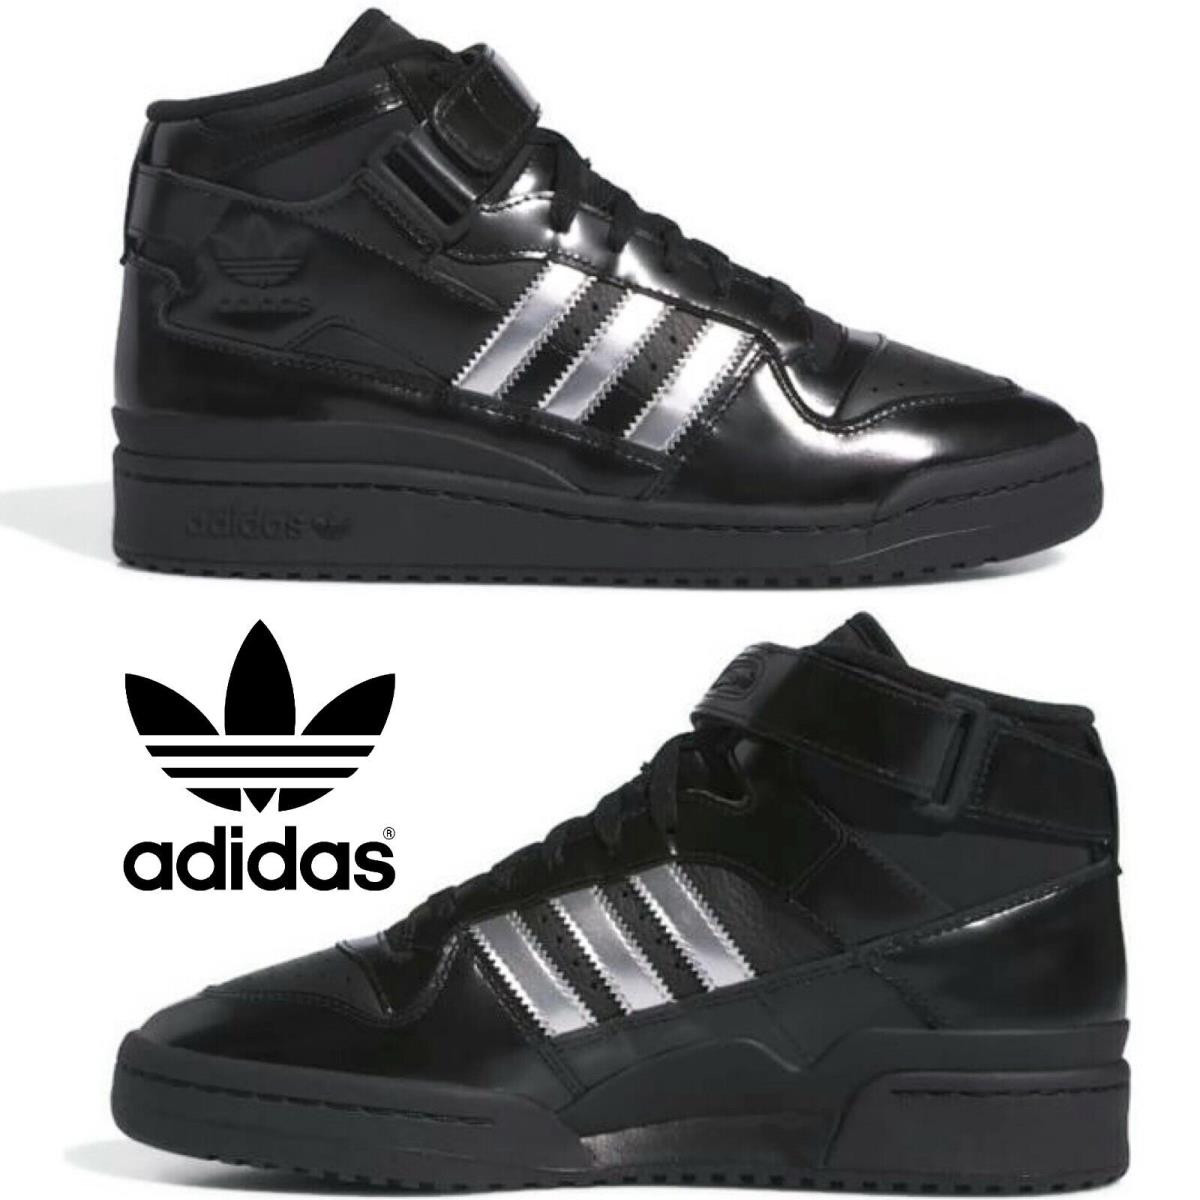 Adidas Originals Forum 84 Mid Men`s Sneakers Comfort Casual High Top Shoes Black - Black , Core Black / Silver Metallic / Core Black Manufacturer